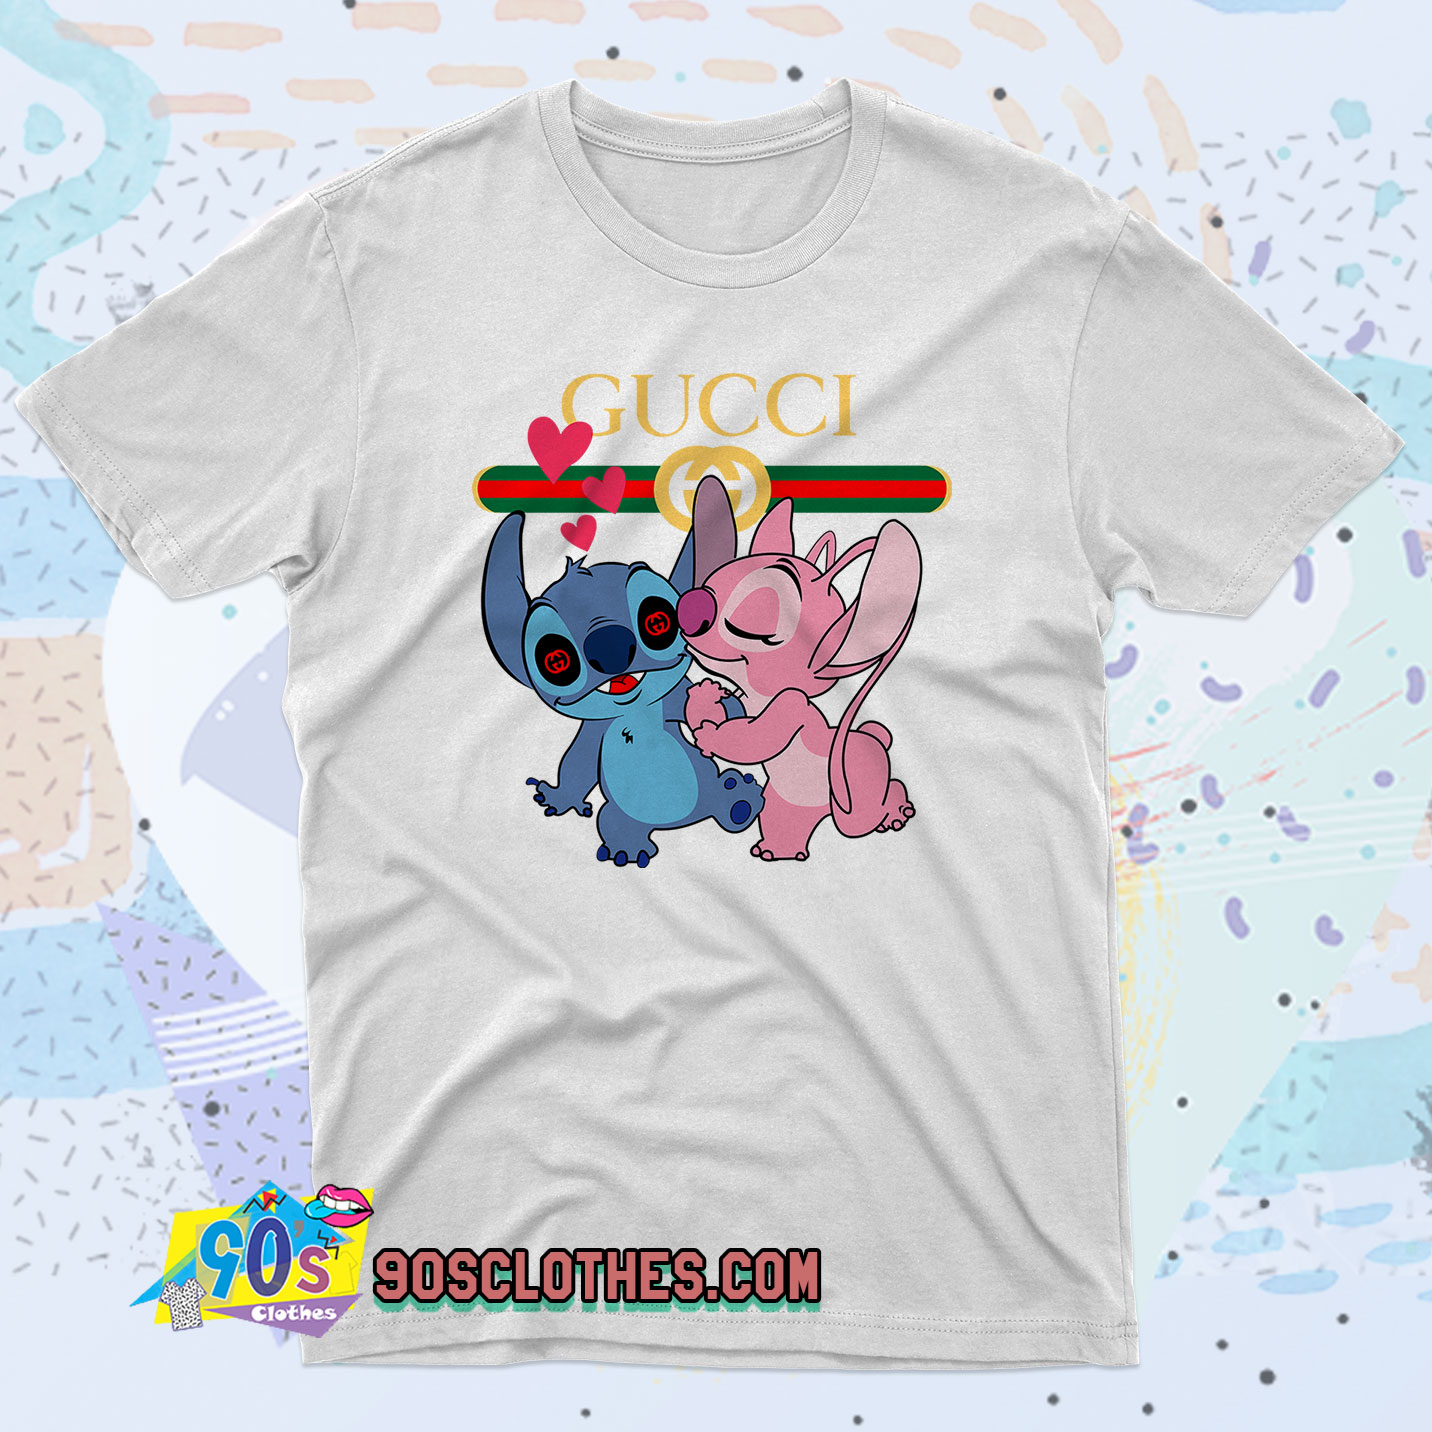 gucci kiss shirt